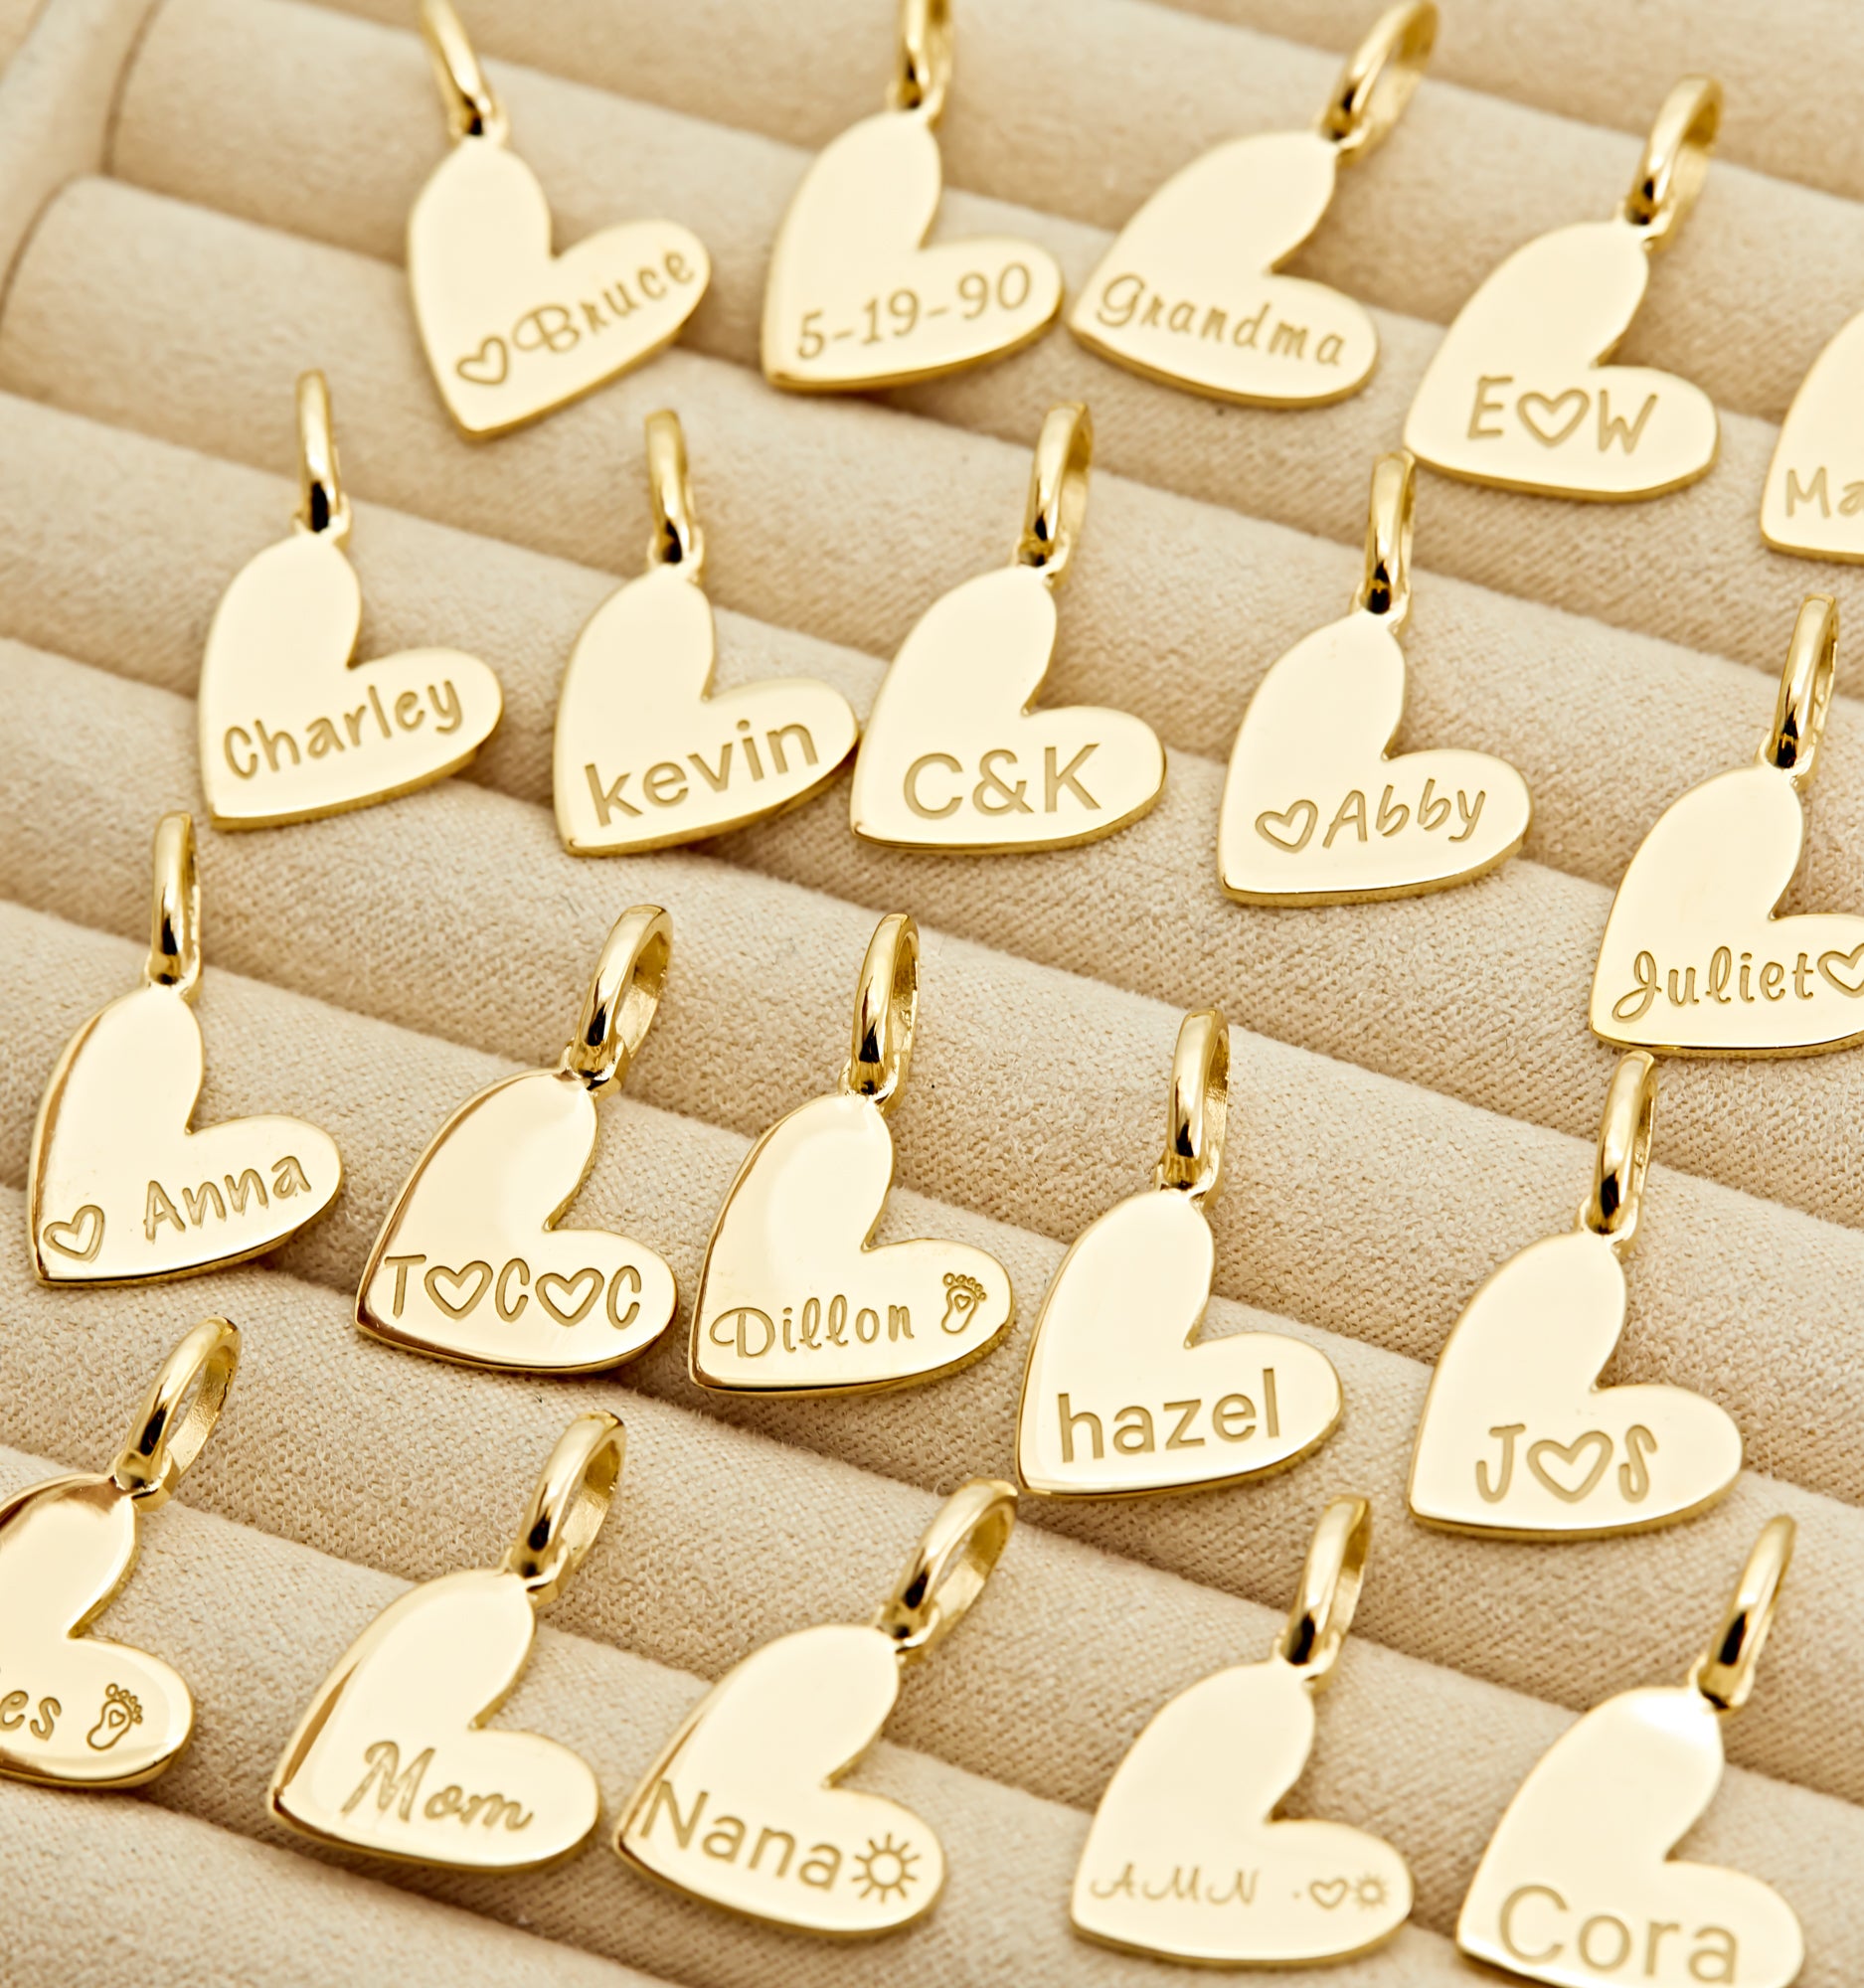 Pandora Double Heart Pendant Sparkling Collier Necklace | REEDS Jewelers